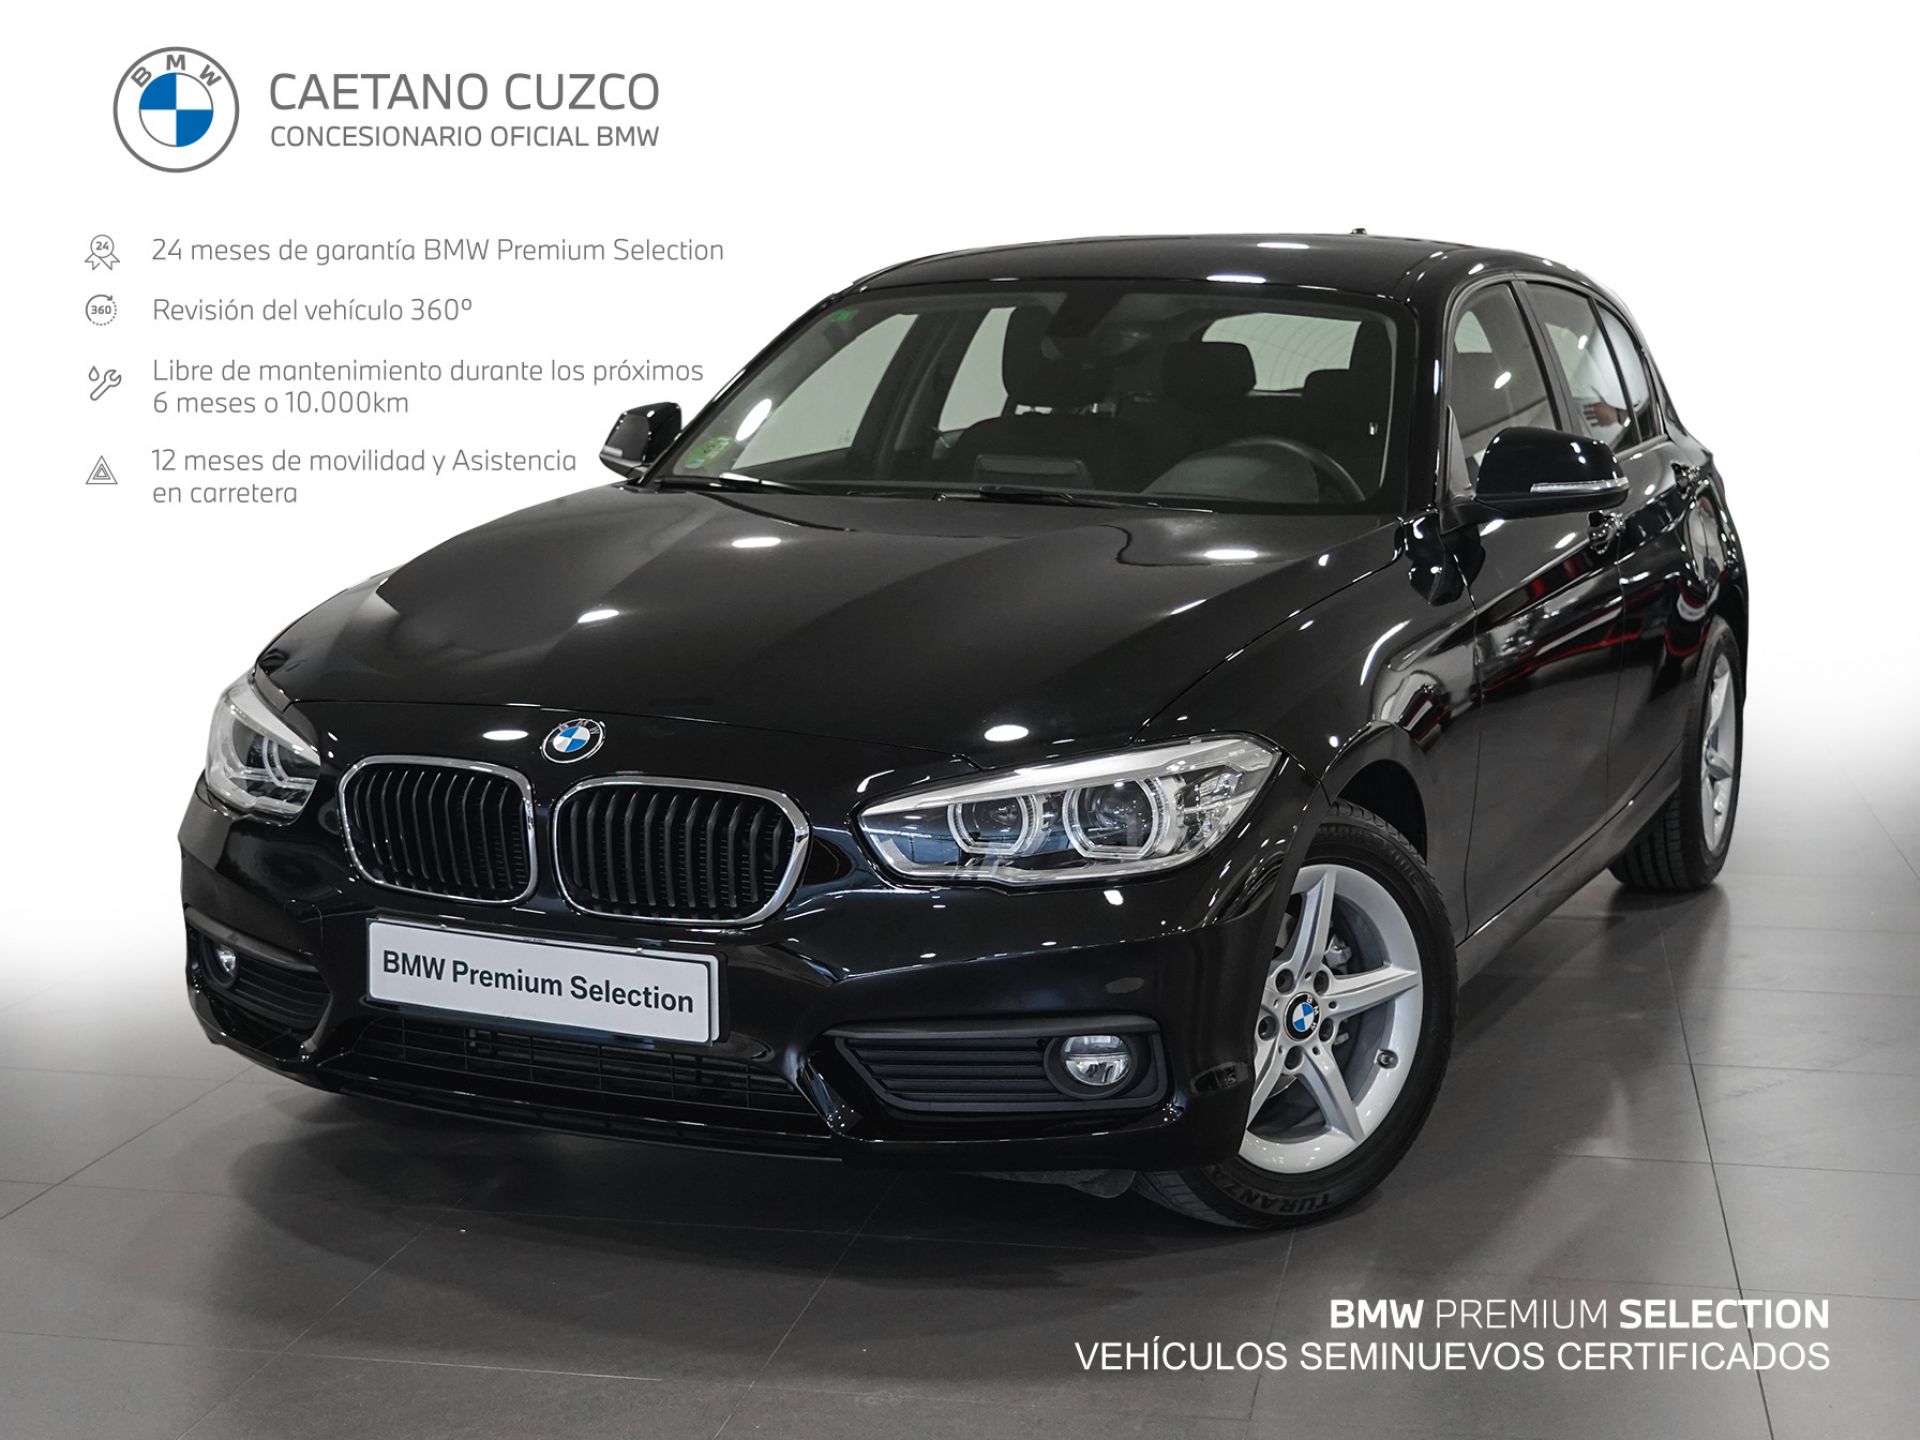 BMW Serie 1 34260 kms (sólido) segunda mano Madrid (2713) | Caetano Cuzco